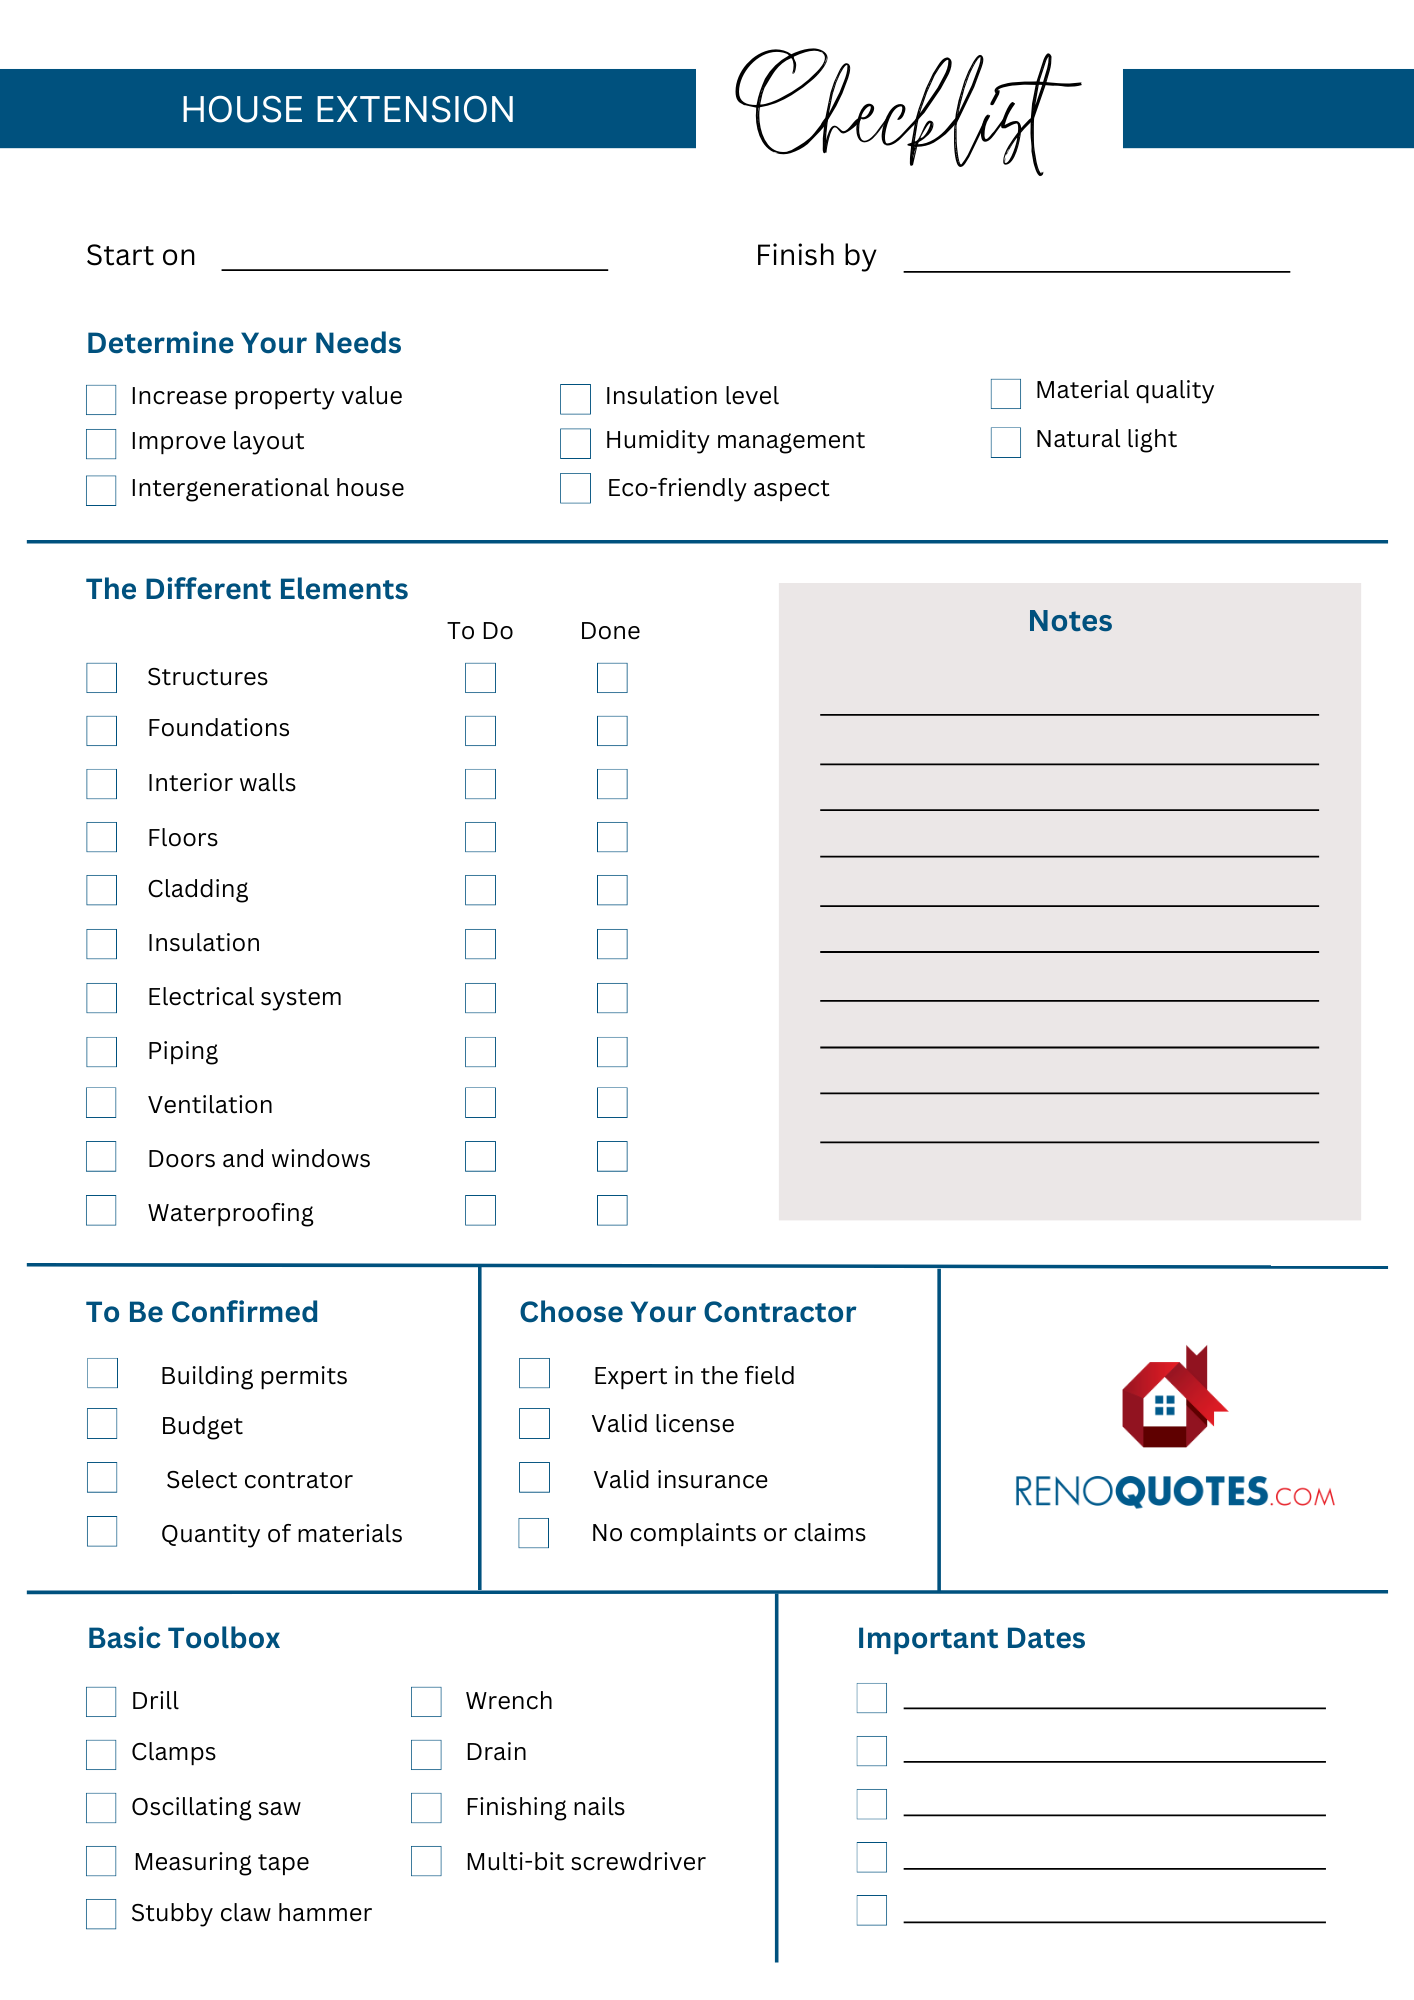 Home extension checklist